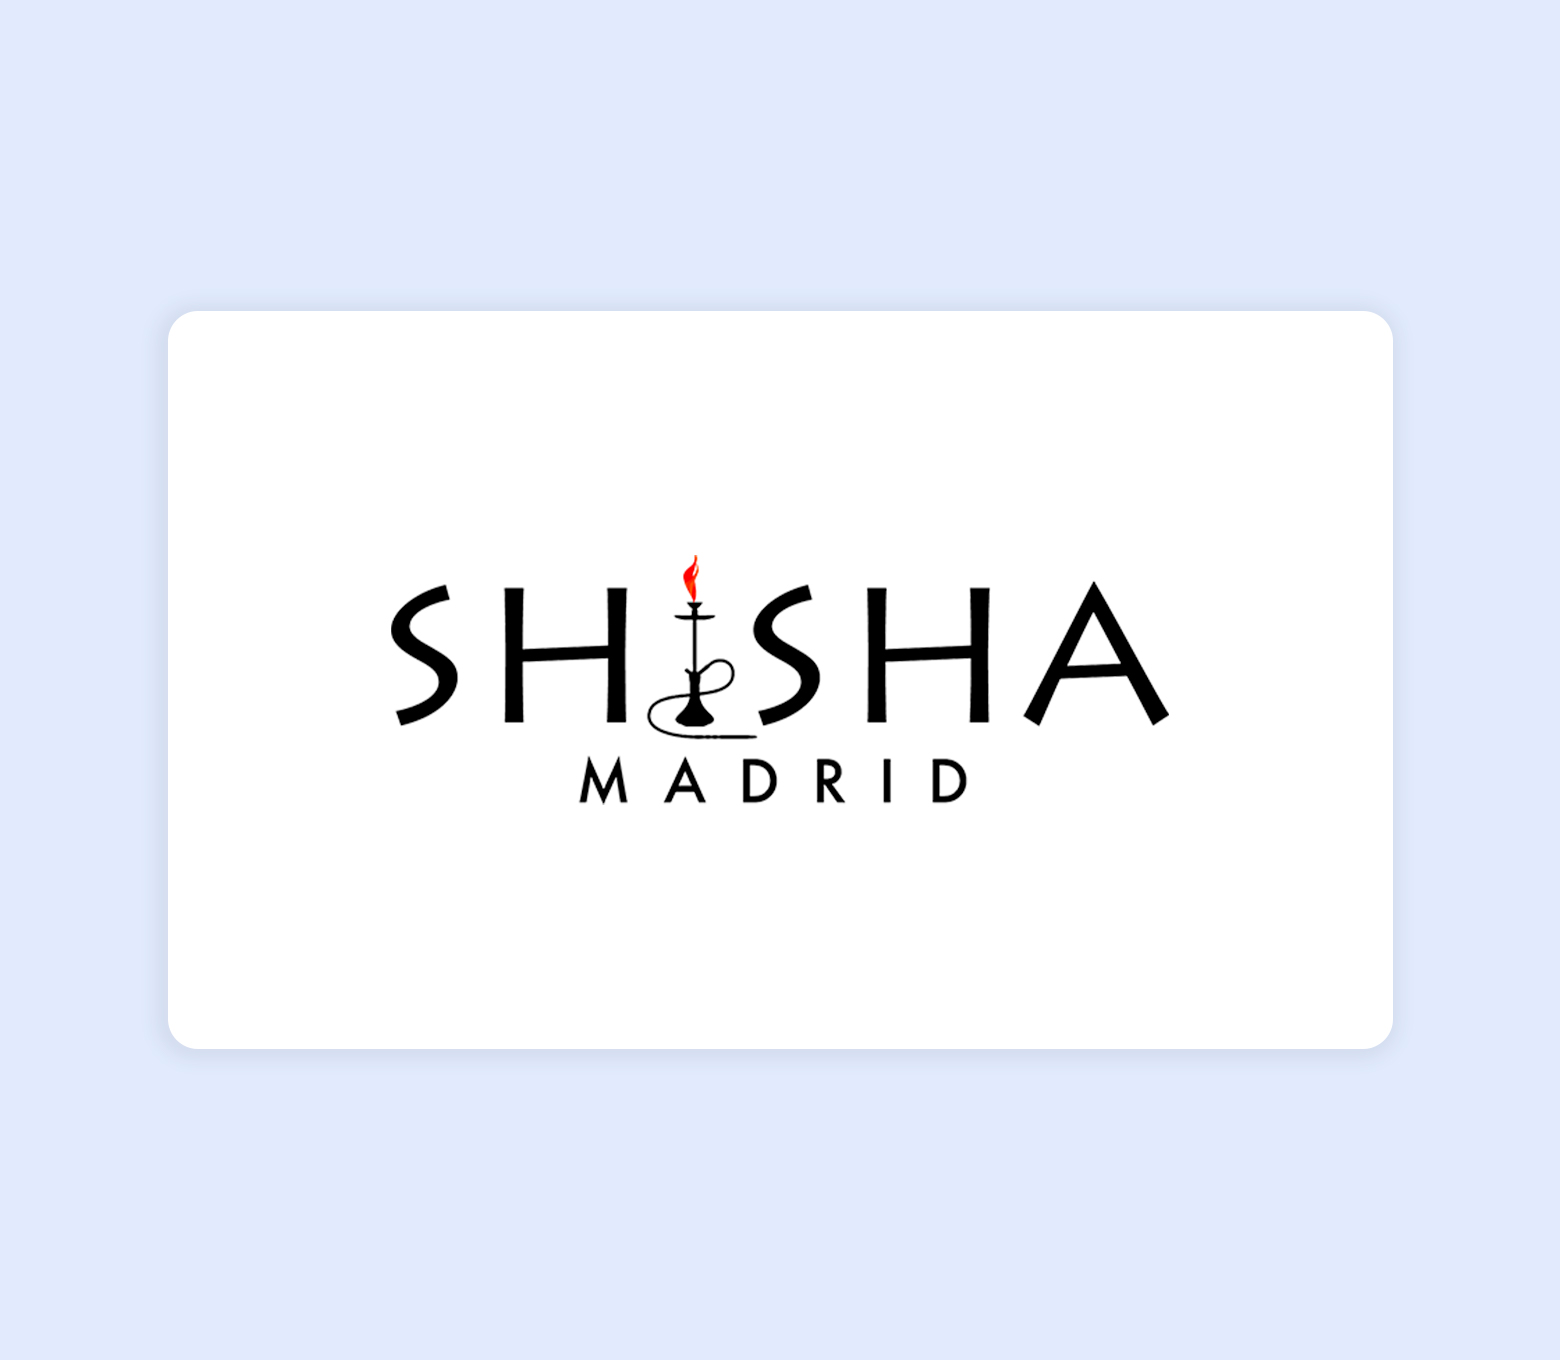 SHISHA MADRID